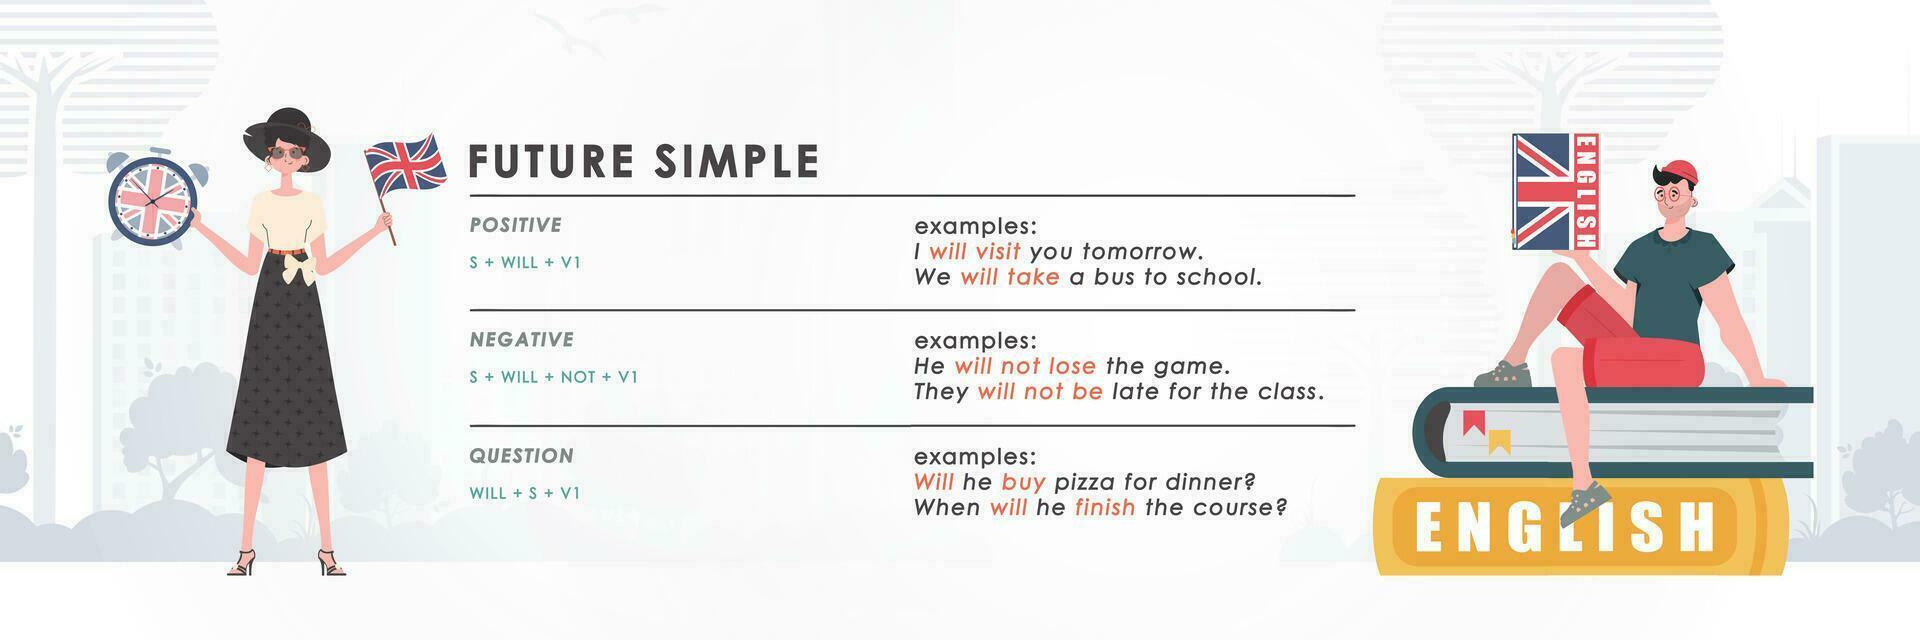 futuro sencillo regla. póster para aprendizaje inglés. de moda vector estilo.